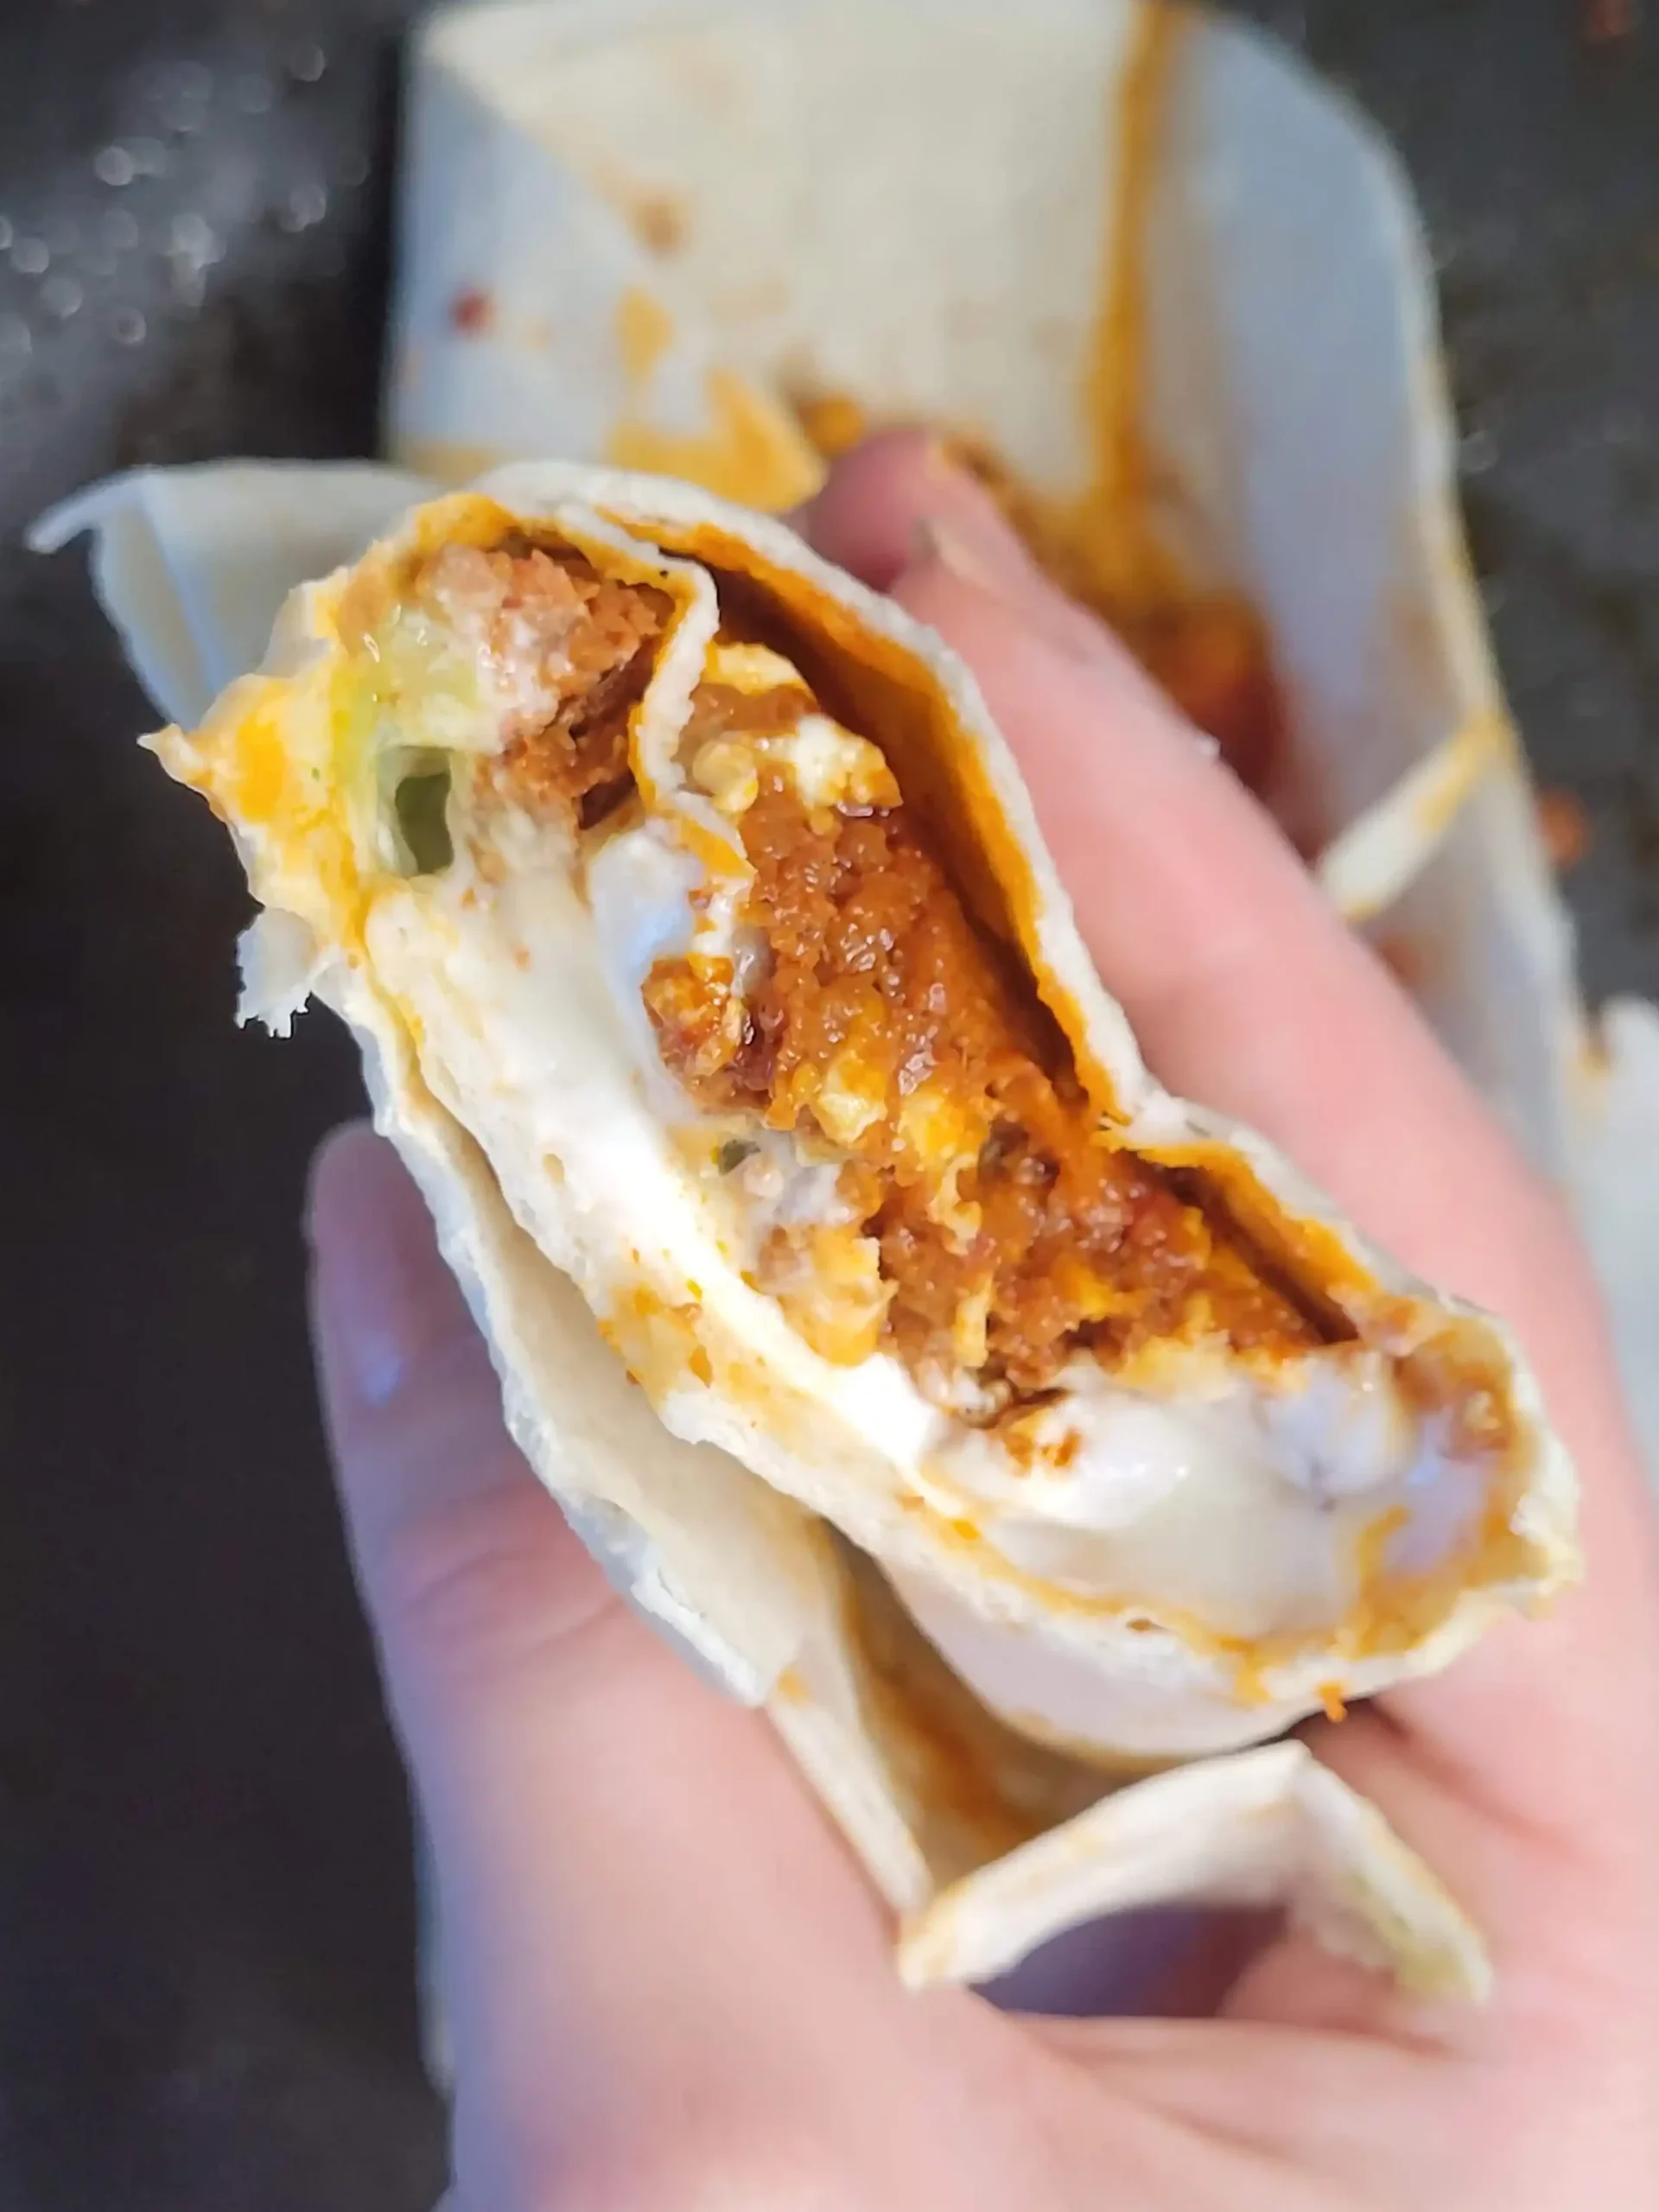 partially eaten chorizo taco with hand holding it.